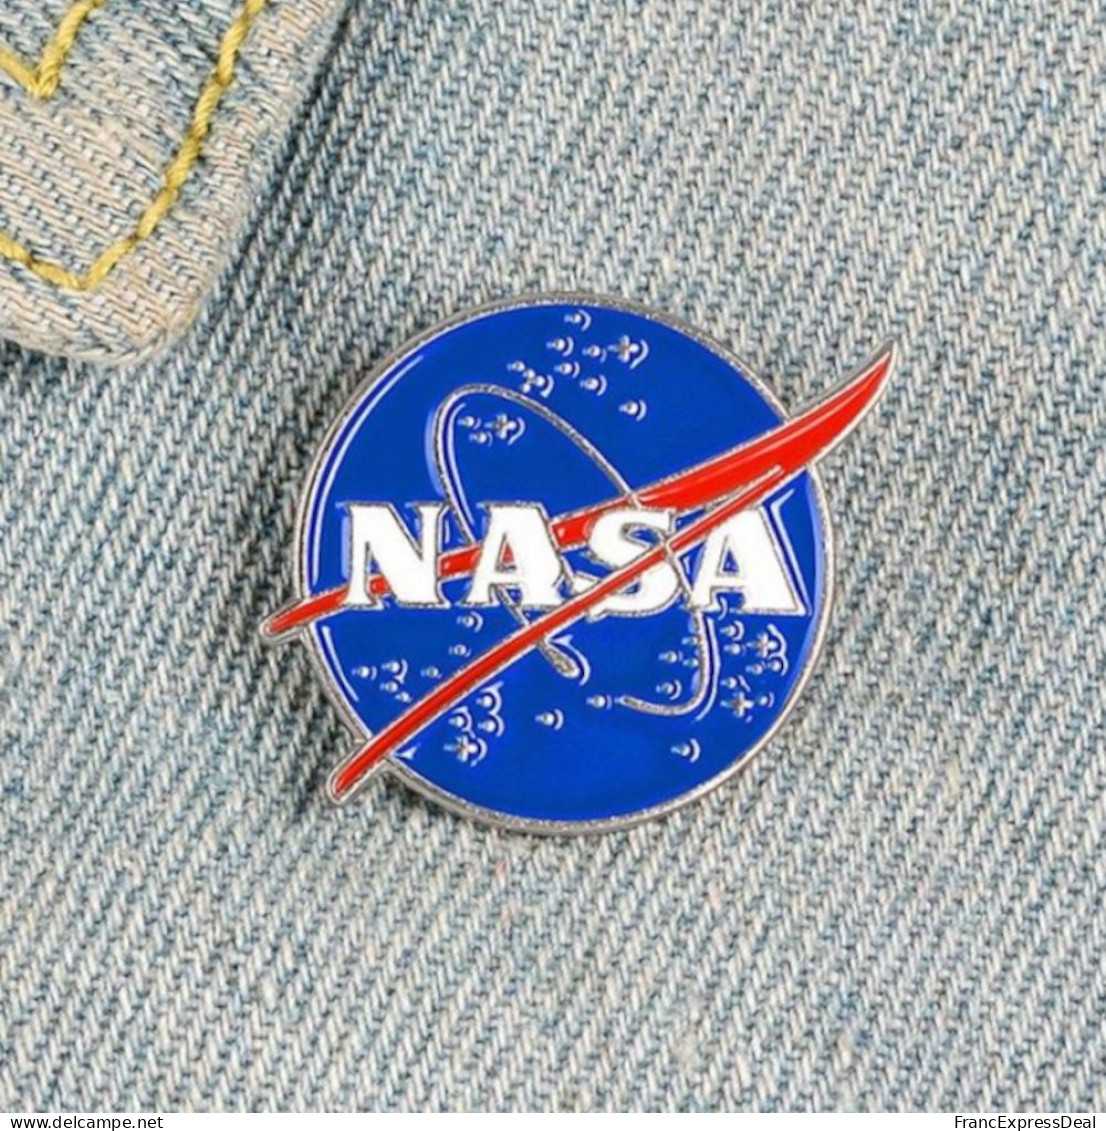 Pin's NEUF En Métal Pins - NASA Agence Spatiale Américaine (Réf 1) - Espacio